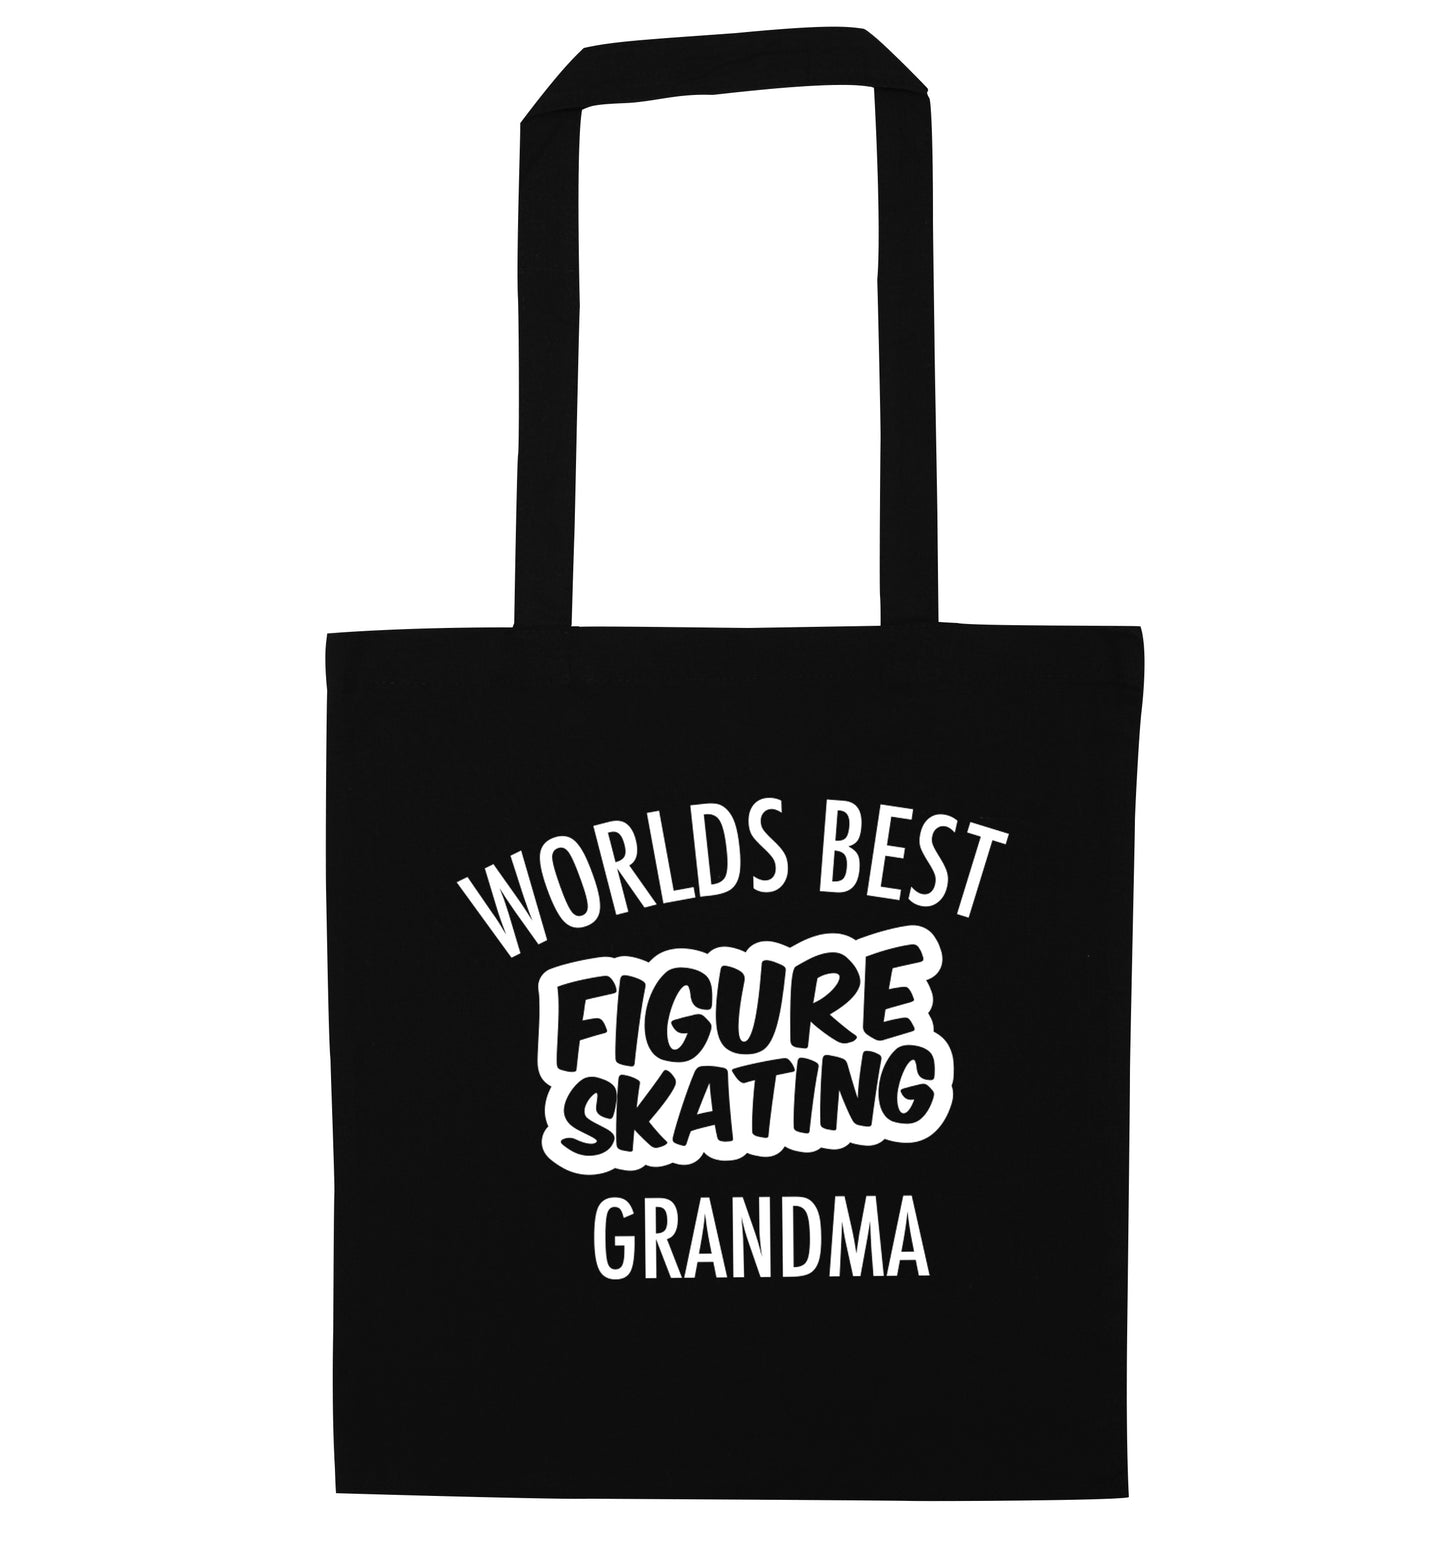 Worlds best figure skating grandma black tote bag